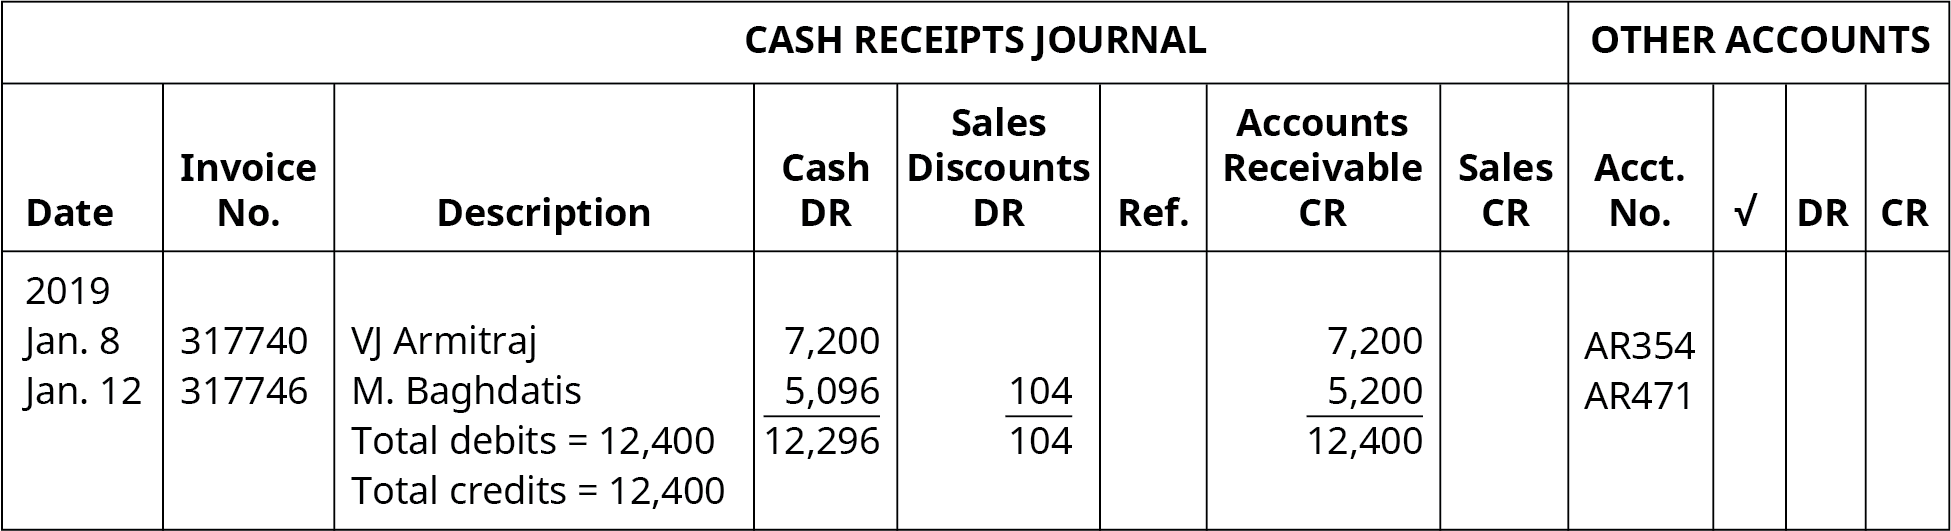 Cash Receipts Journal, Other Accounts. Nine columns, labeled left to right: Date, Invoice Number, Description, Cash DR, Sales Discounts DR, Ref., Accounts Receivable CR, Sales CR, Account Number. Line One: January 8, 2019; 317740; VJ Armitraj; 7,200; Blank; Blank; 7,200; Blank; AR354. Line Two: January 9, 2019; 317746; M. Baghdatis;5,096; 104; Blank; 5,200; Blank; AR471. Line Three: Blank, Blank, Total debits = 12,400; 12,296; 104; Blank; 12,400; Blank; Blank. Line Four: Blank; Blank; Total credits = 12,400; Blank; Blank; Blank; Blank; Blank; Blank.